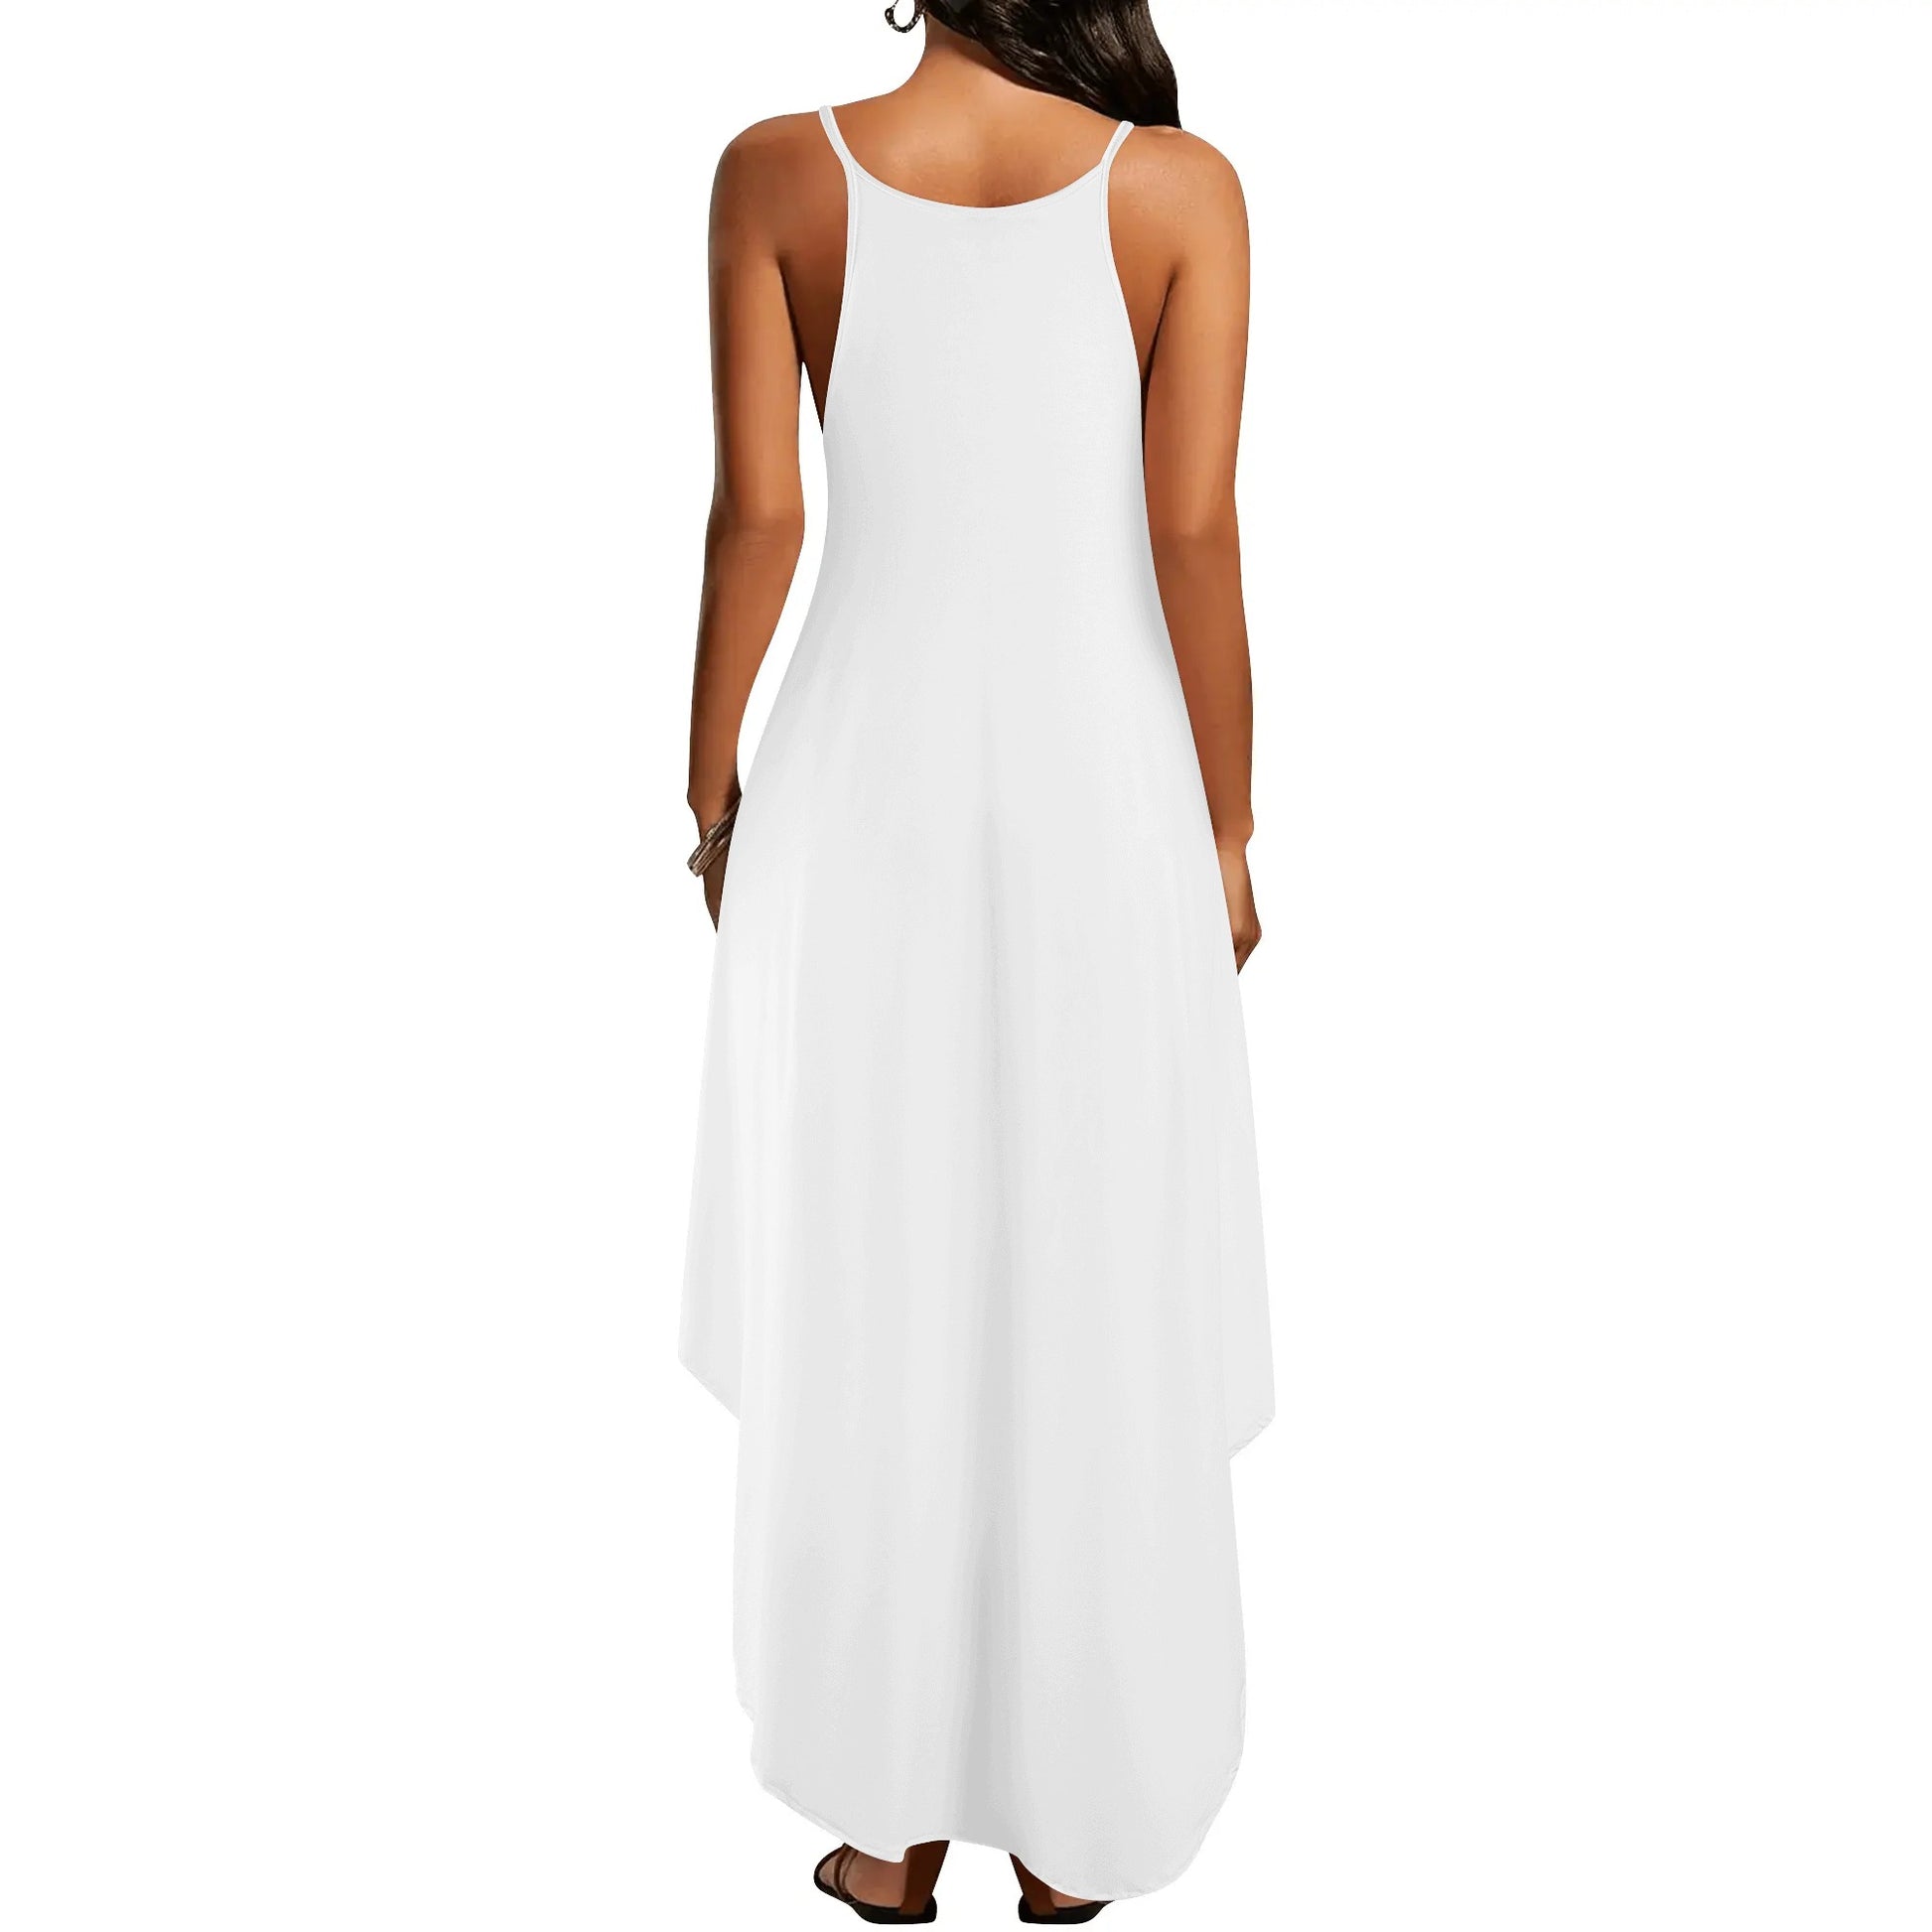 God Is Greater Womens Christian Elegant Sleeveless Summer Maxi Dress popcustoms